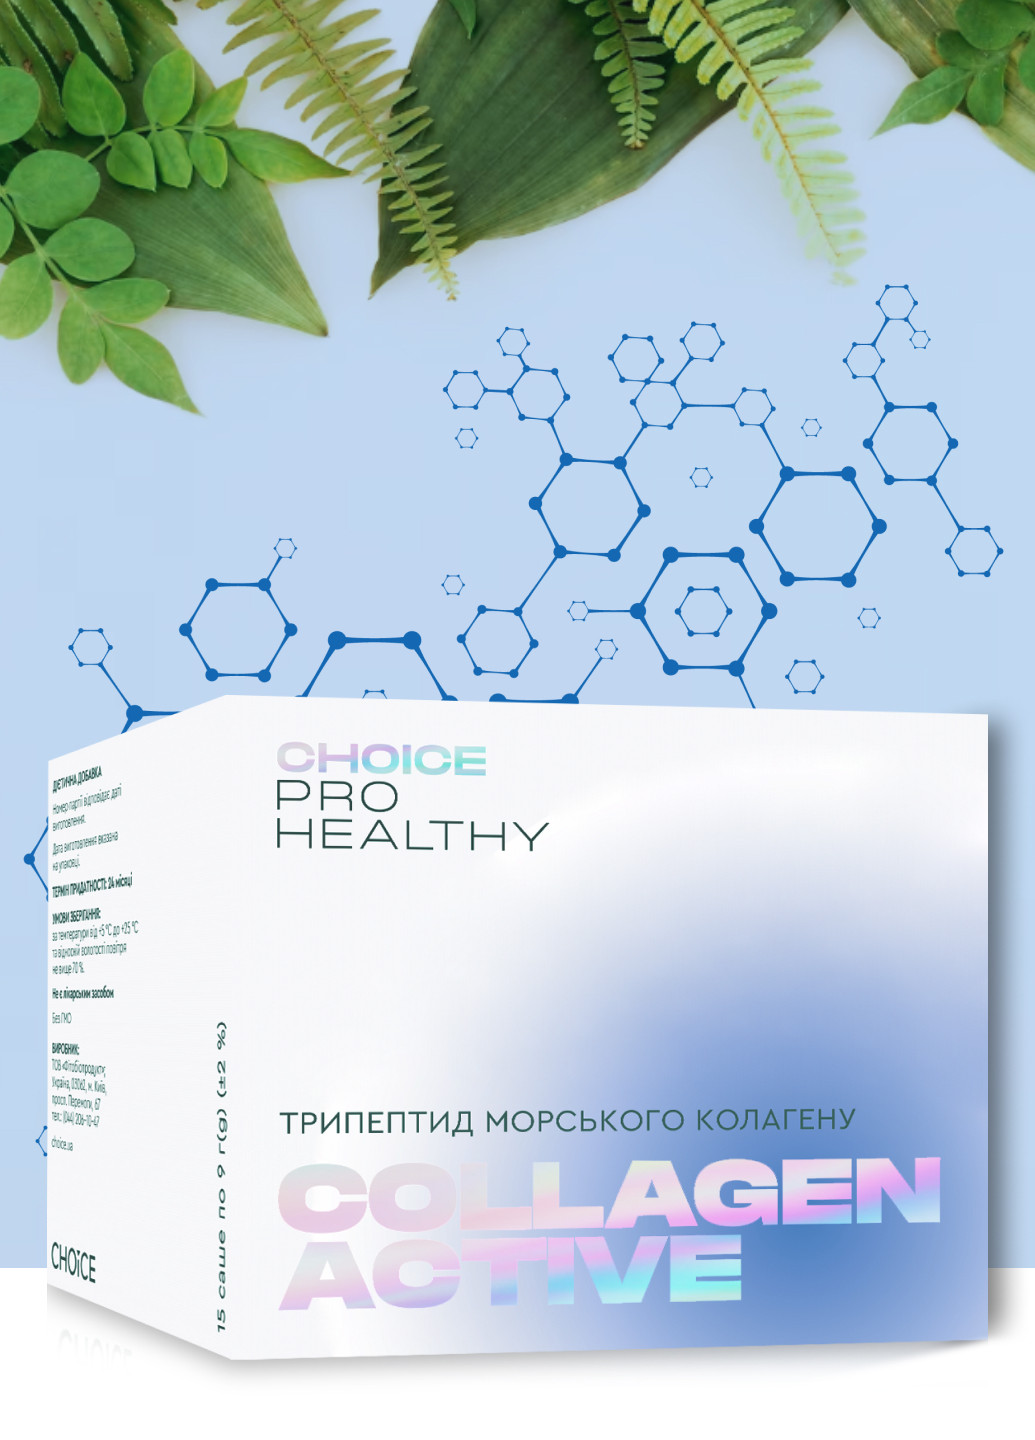 Трипептид морського колагену для молодості і краси Collagen Active PRO HEALTHY (15 саше) CHOICE (266903357)